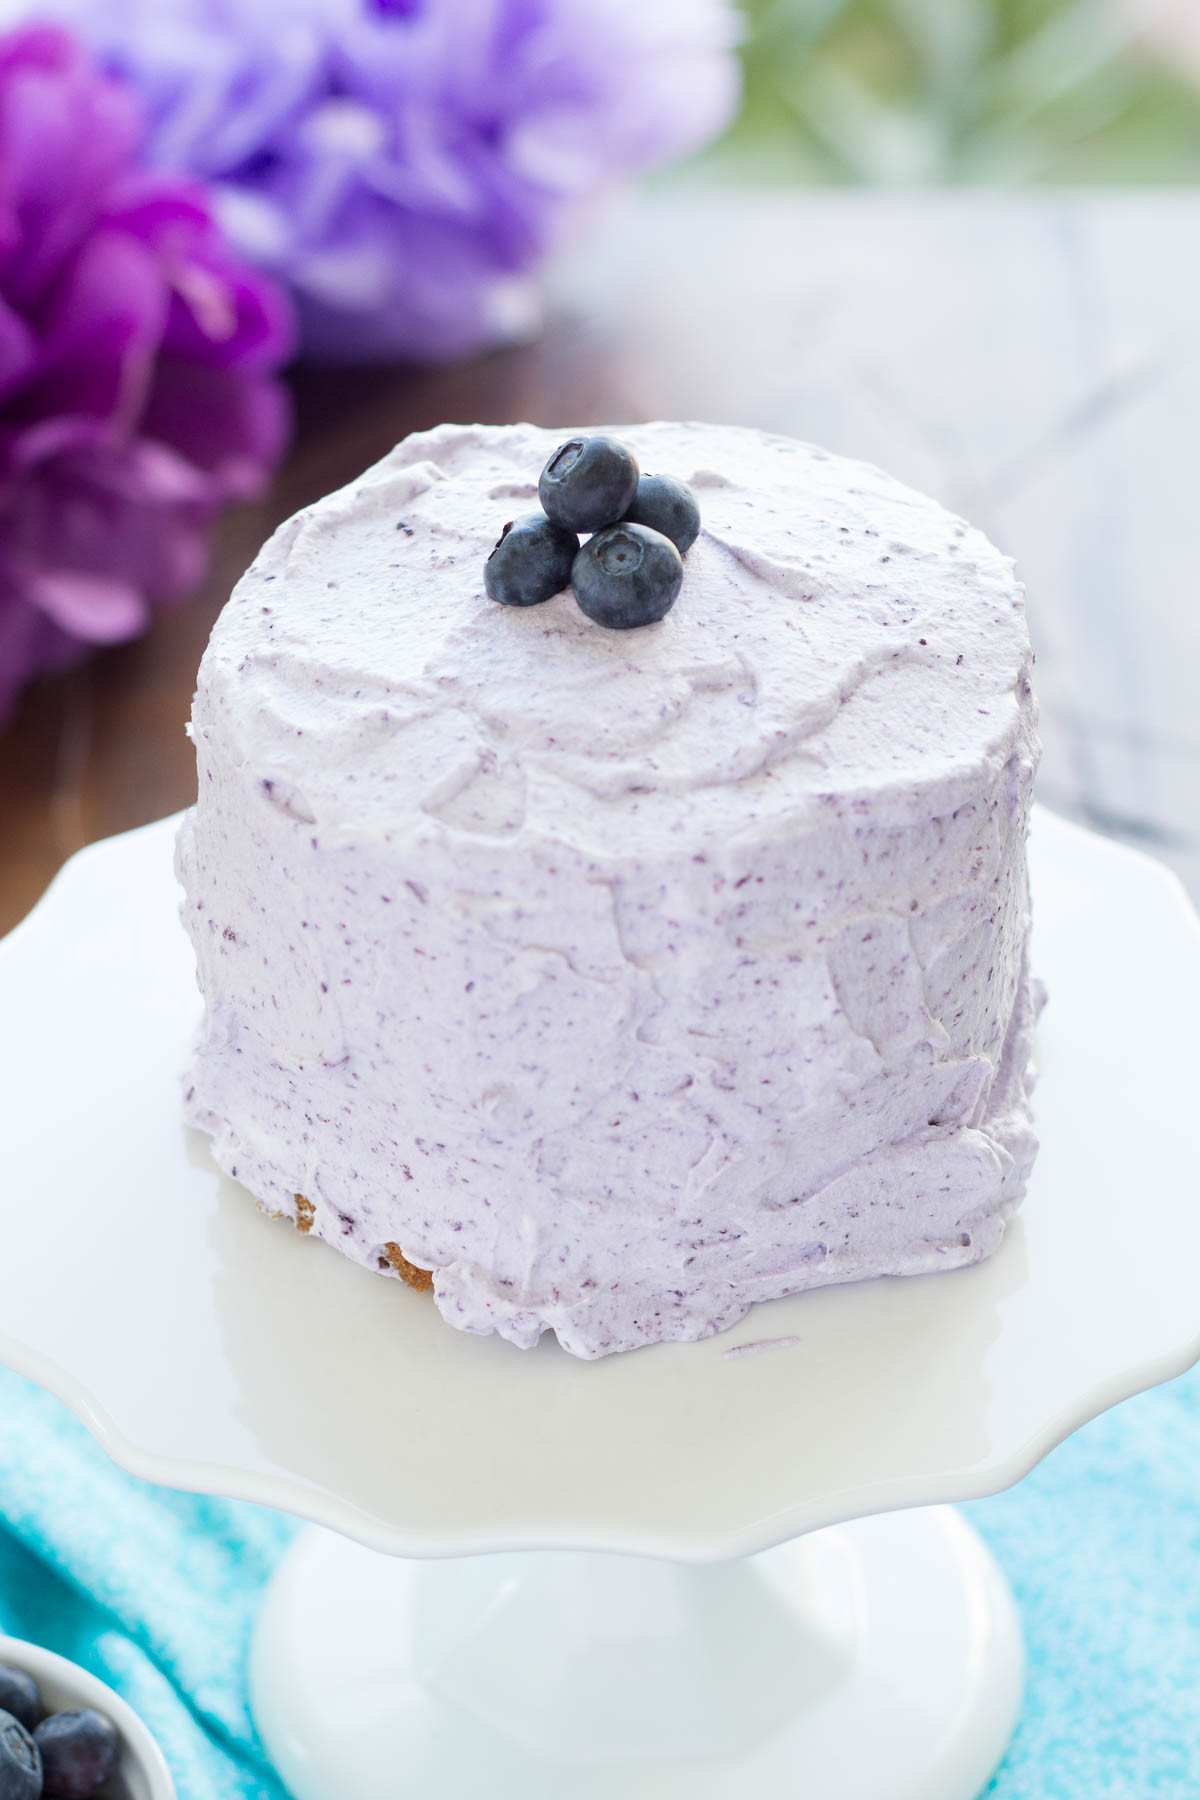 Healthy Smash Cake Recipe
 Healthier Smash Cake Recipe Hannah s Purple Polka Dot 1st